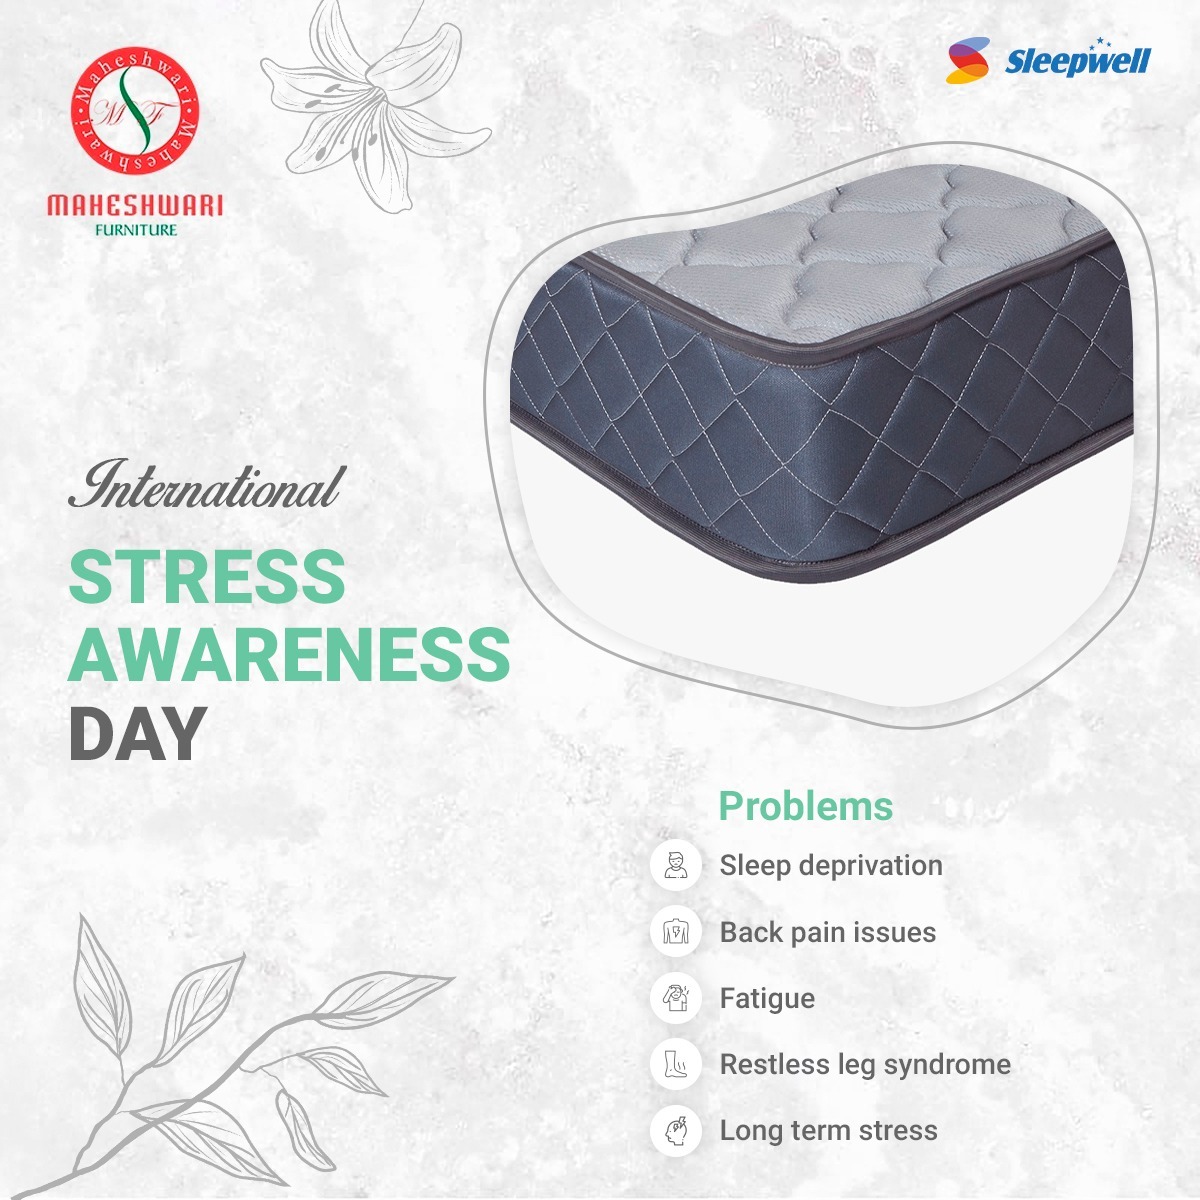 International stress awareness day